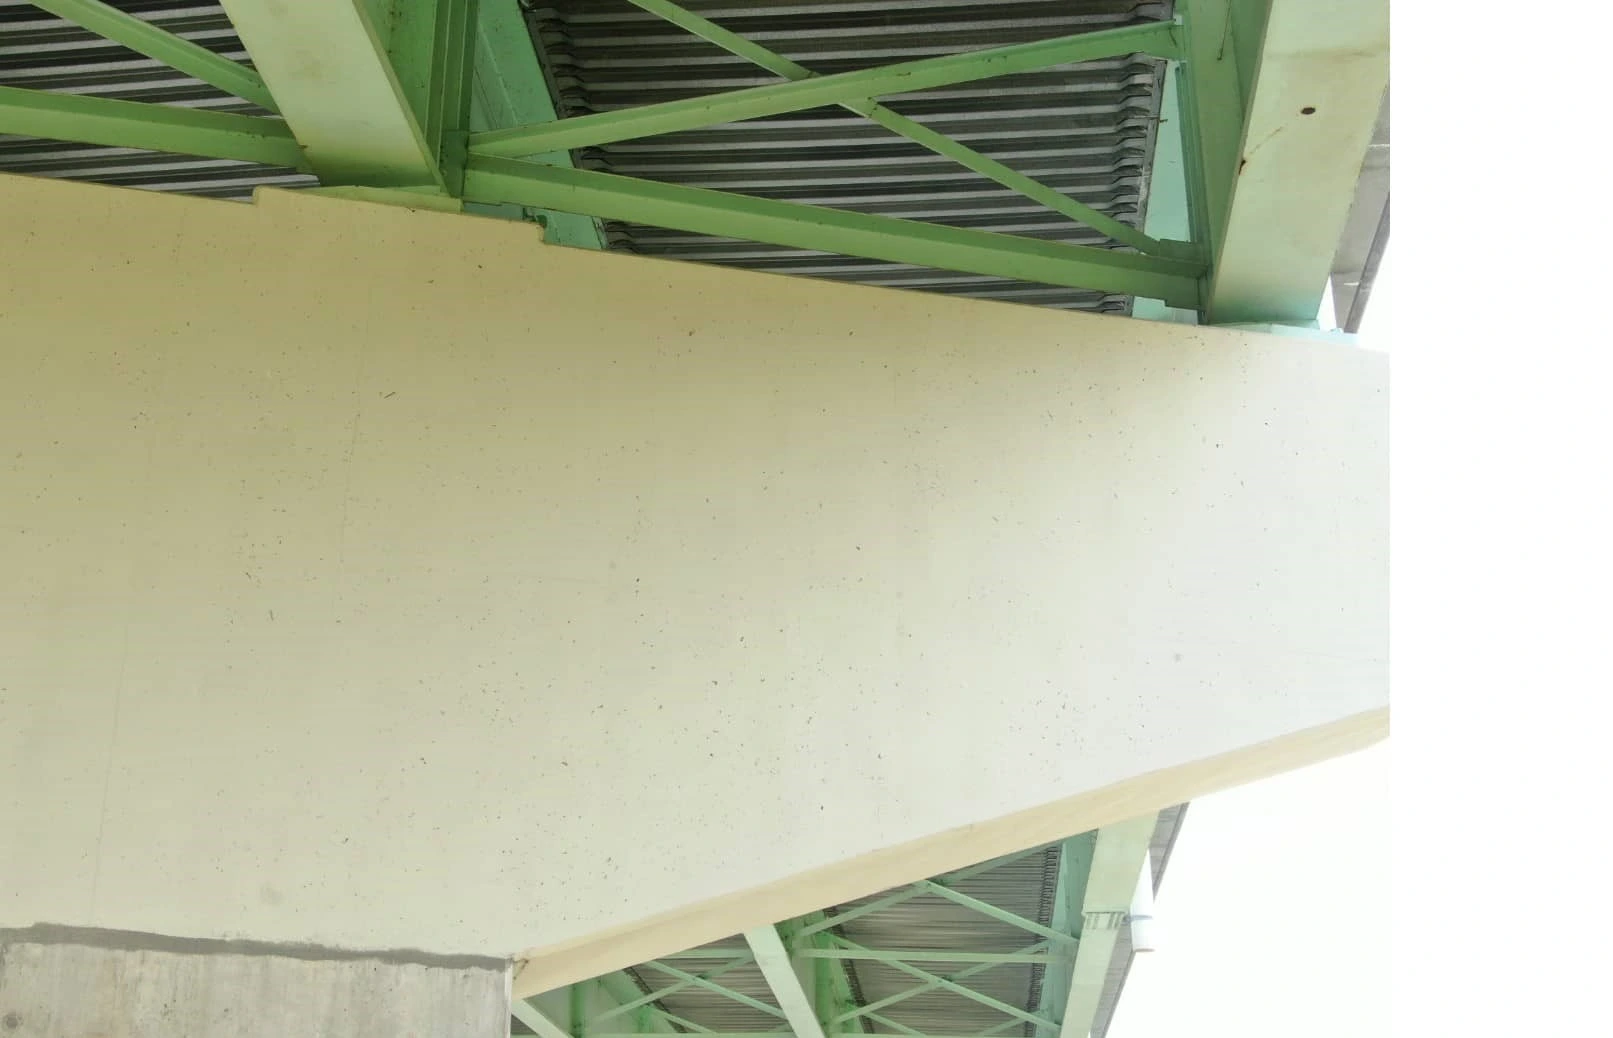 A photo taken by a UAS shows a concrete pier cap supporting a bridge.